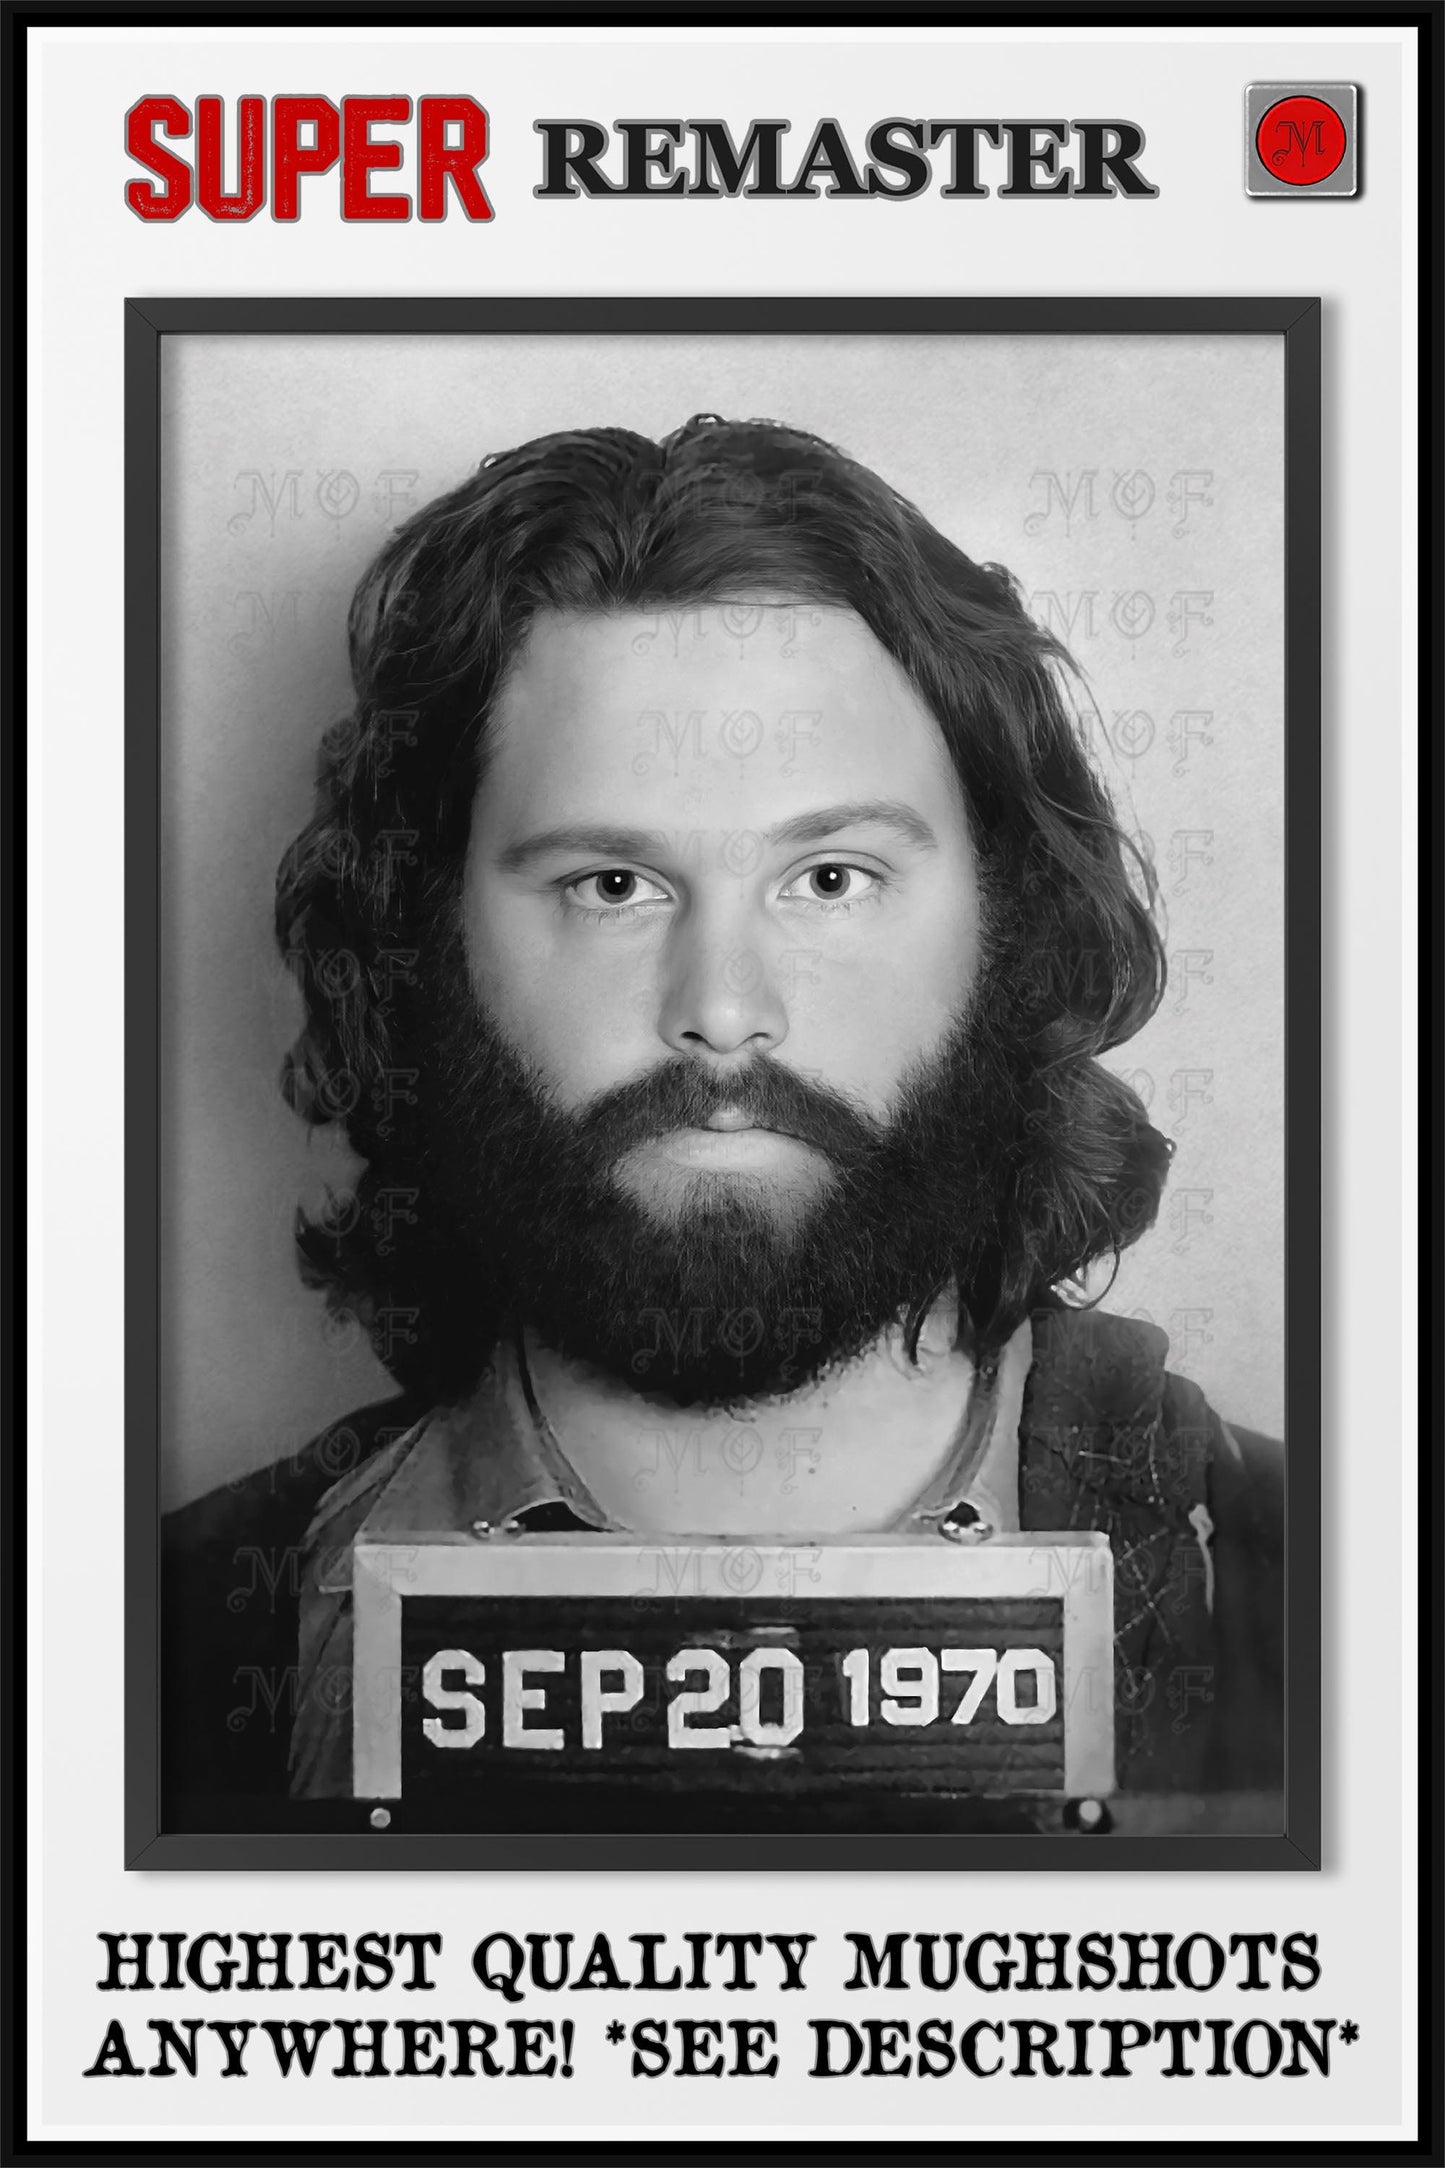 Jim Morrison with Beard Mugshot Poster The Doors REMASTERED #78 MUG